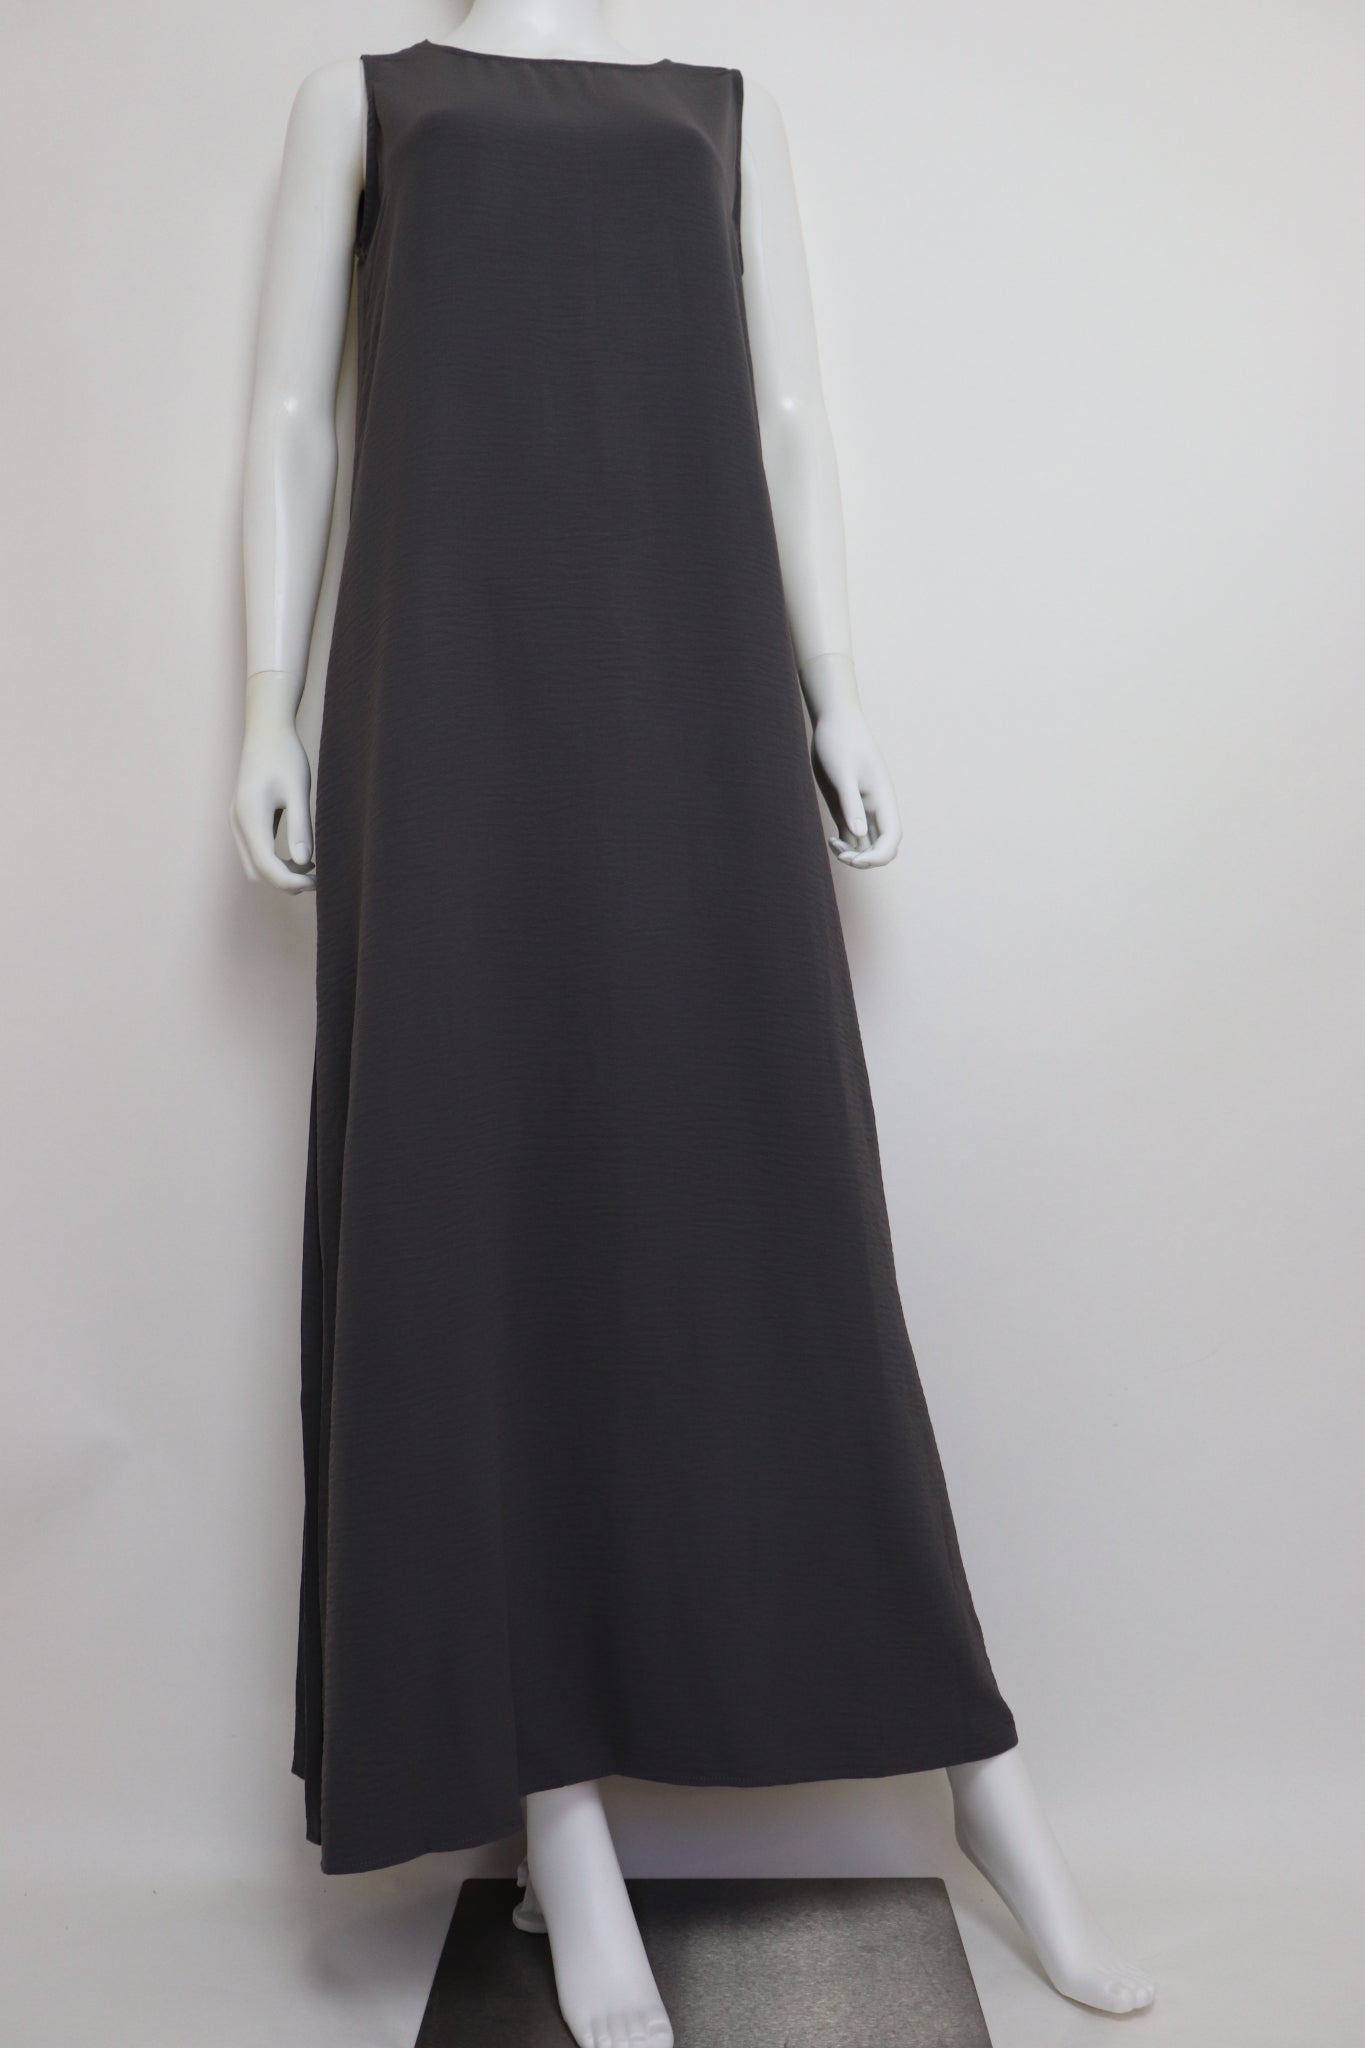 2 Piece Jilbab Dress Set - Charcoal